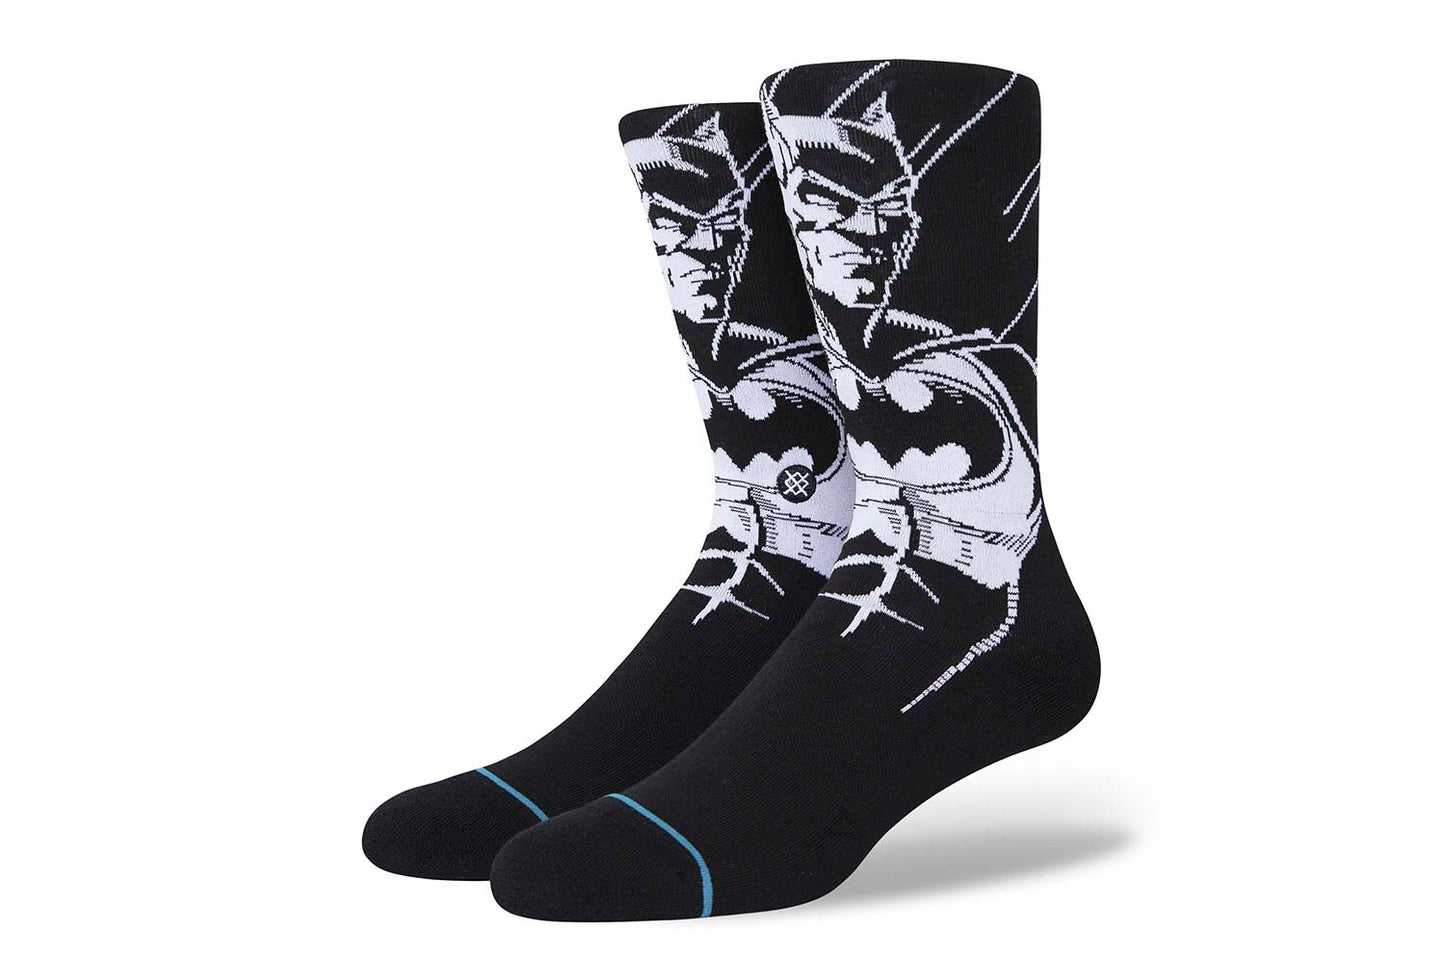 The Batman Crew Socken